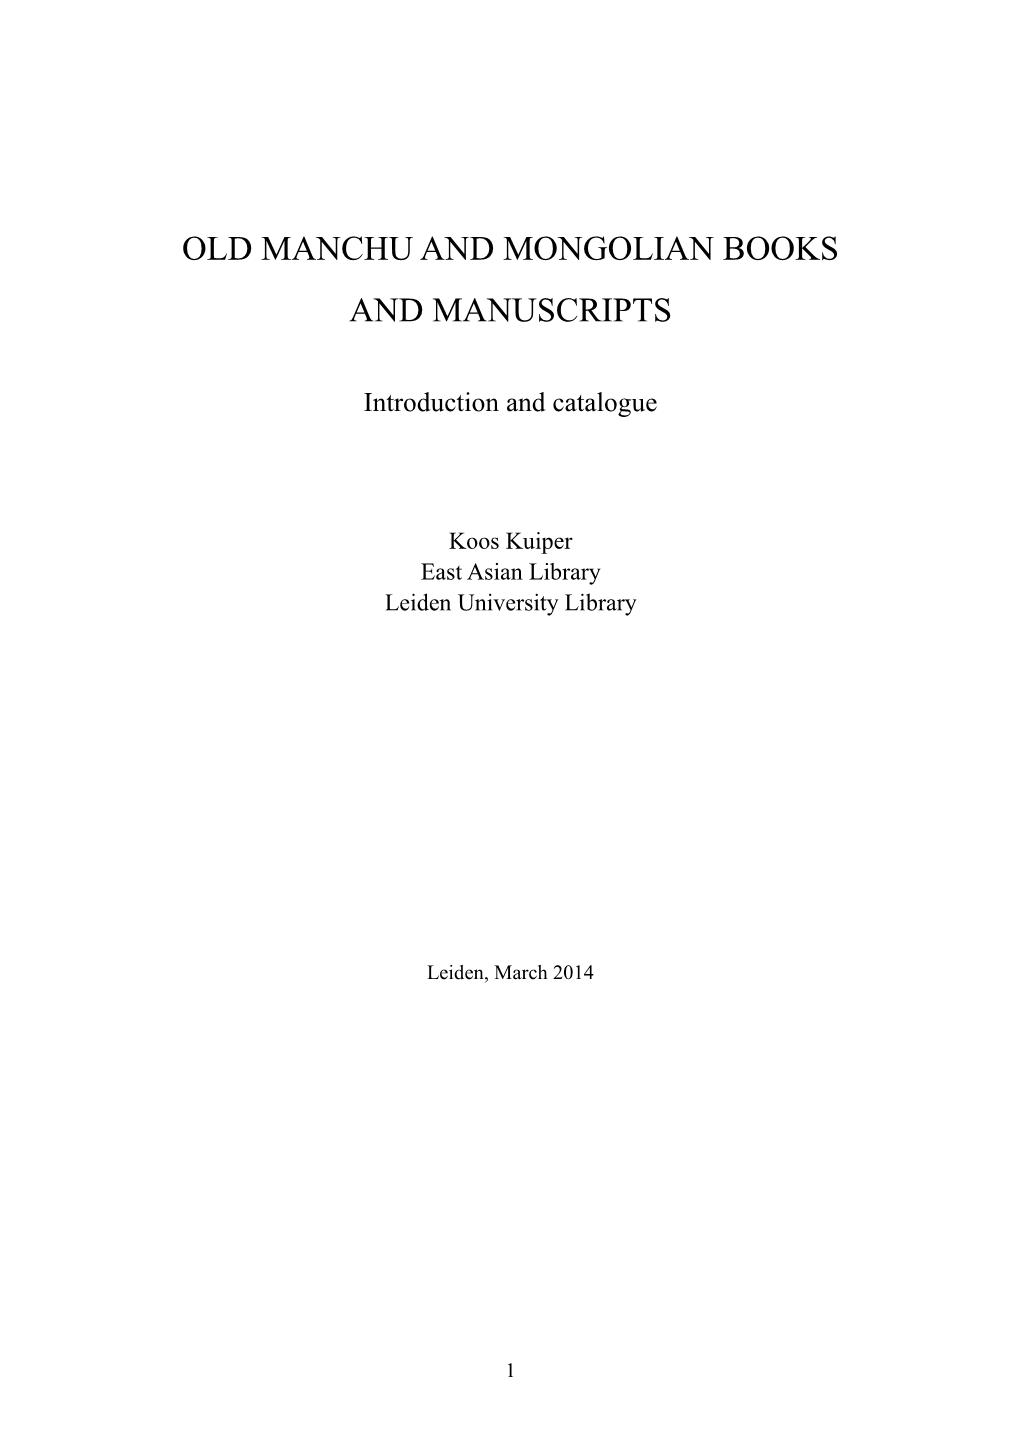 Manchu Books: Overview and Provenance 2 Bibliography 5 I.Classics 6 II